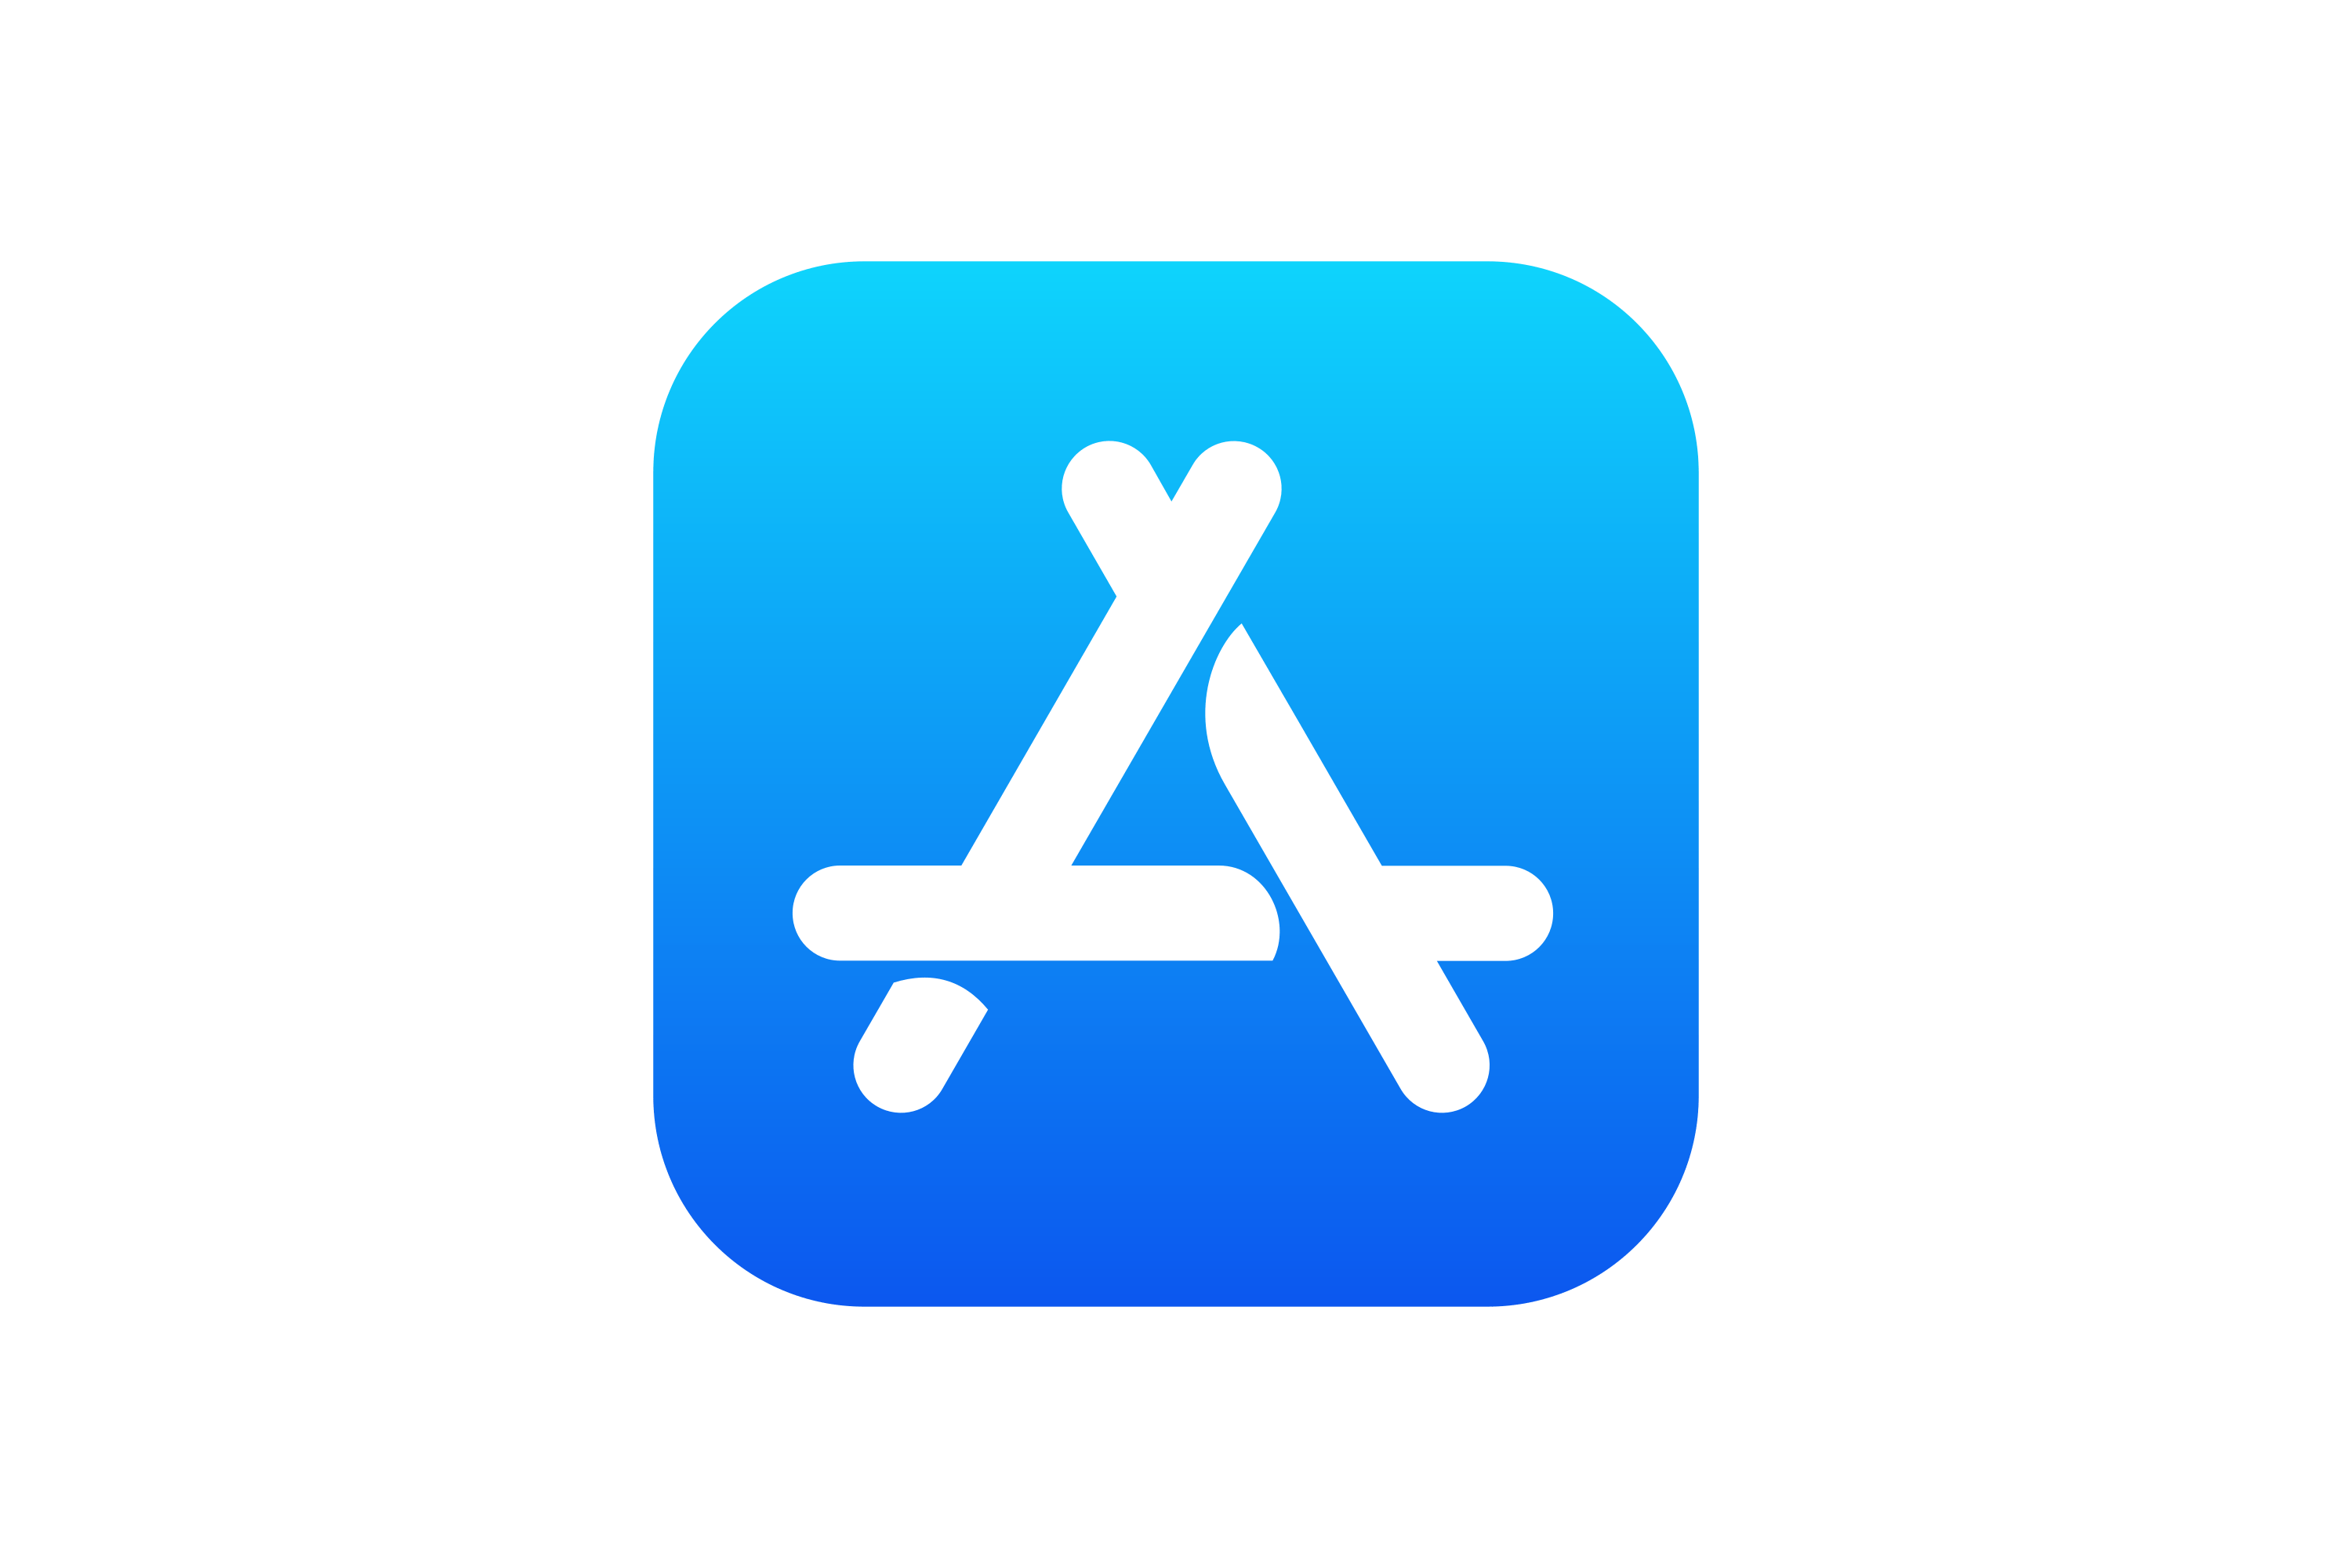 Download App Store Logo in SVG Vector or PNG File Format